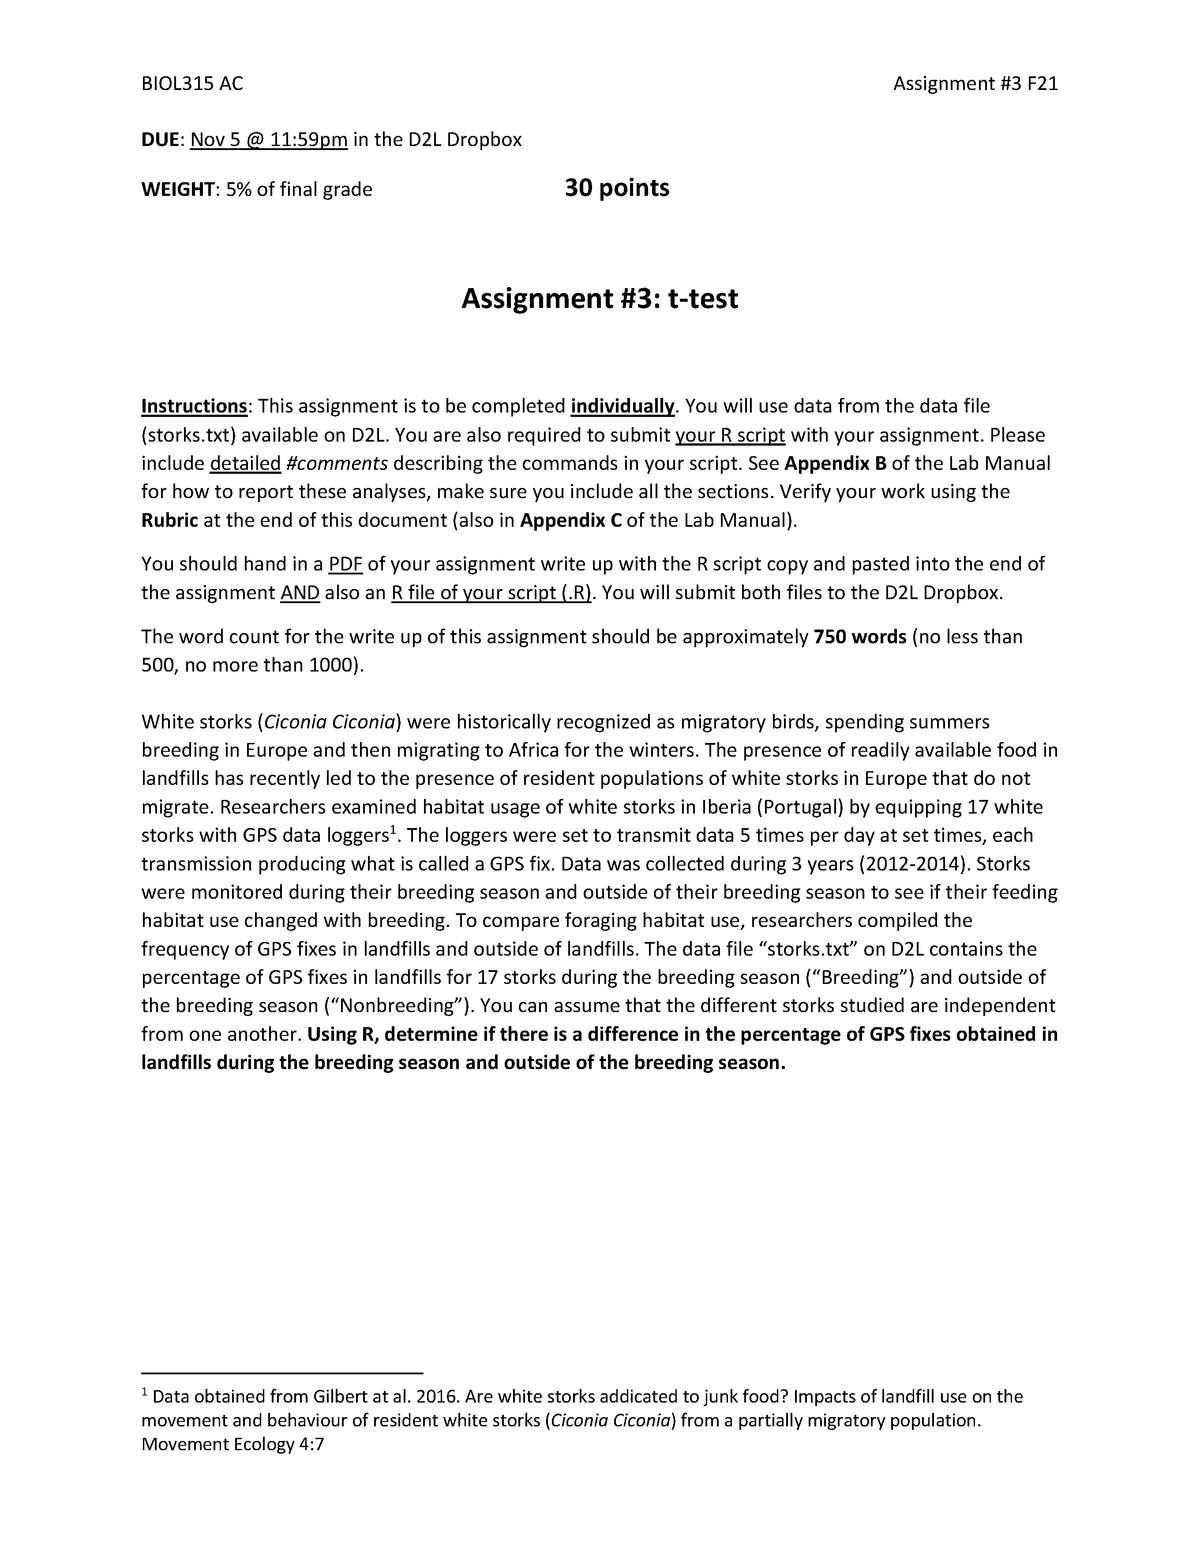 Assignment 3 Biology 315 Fall 2021 Outline - BIOL315 AC Assignment #3 F ...